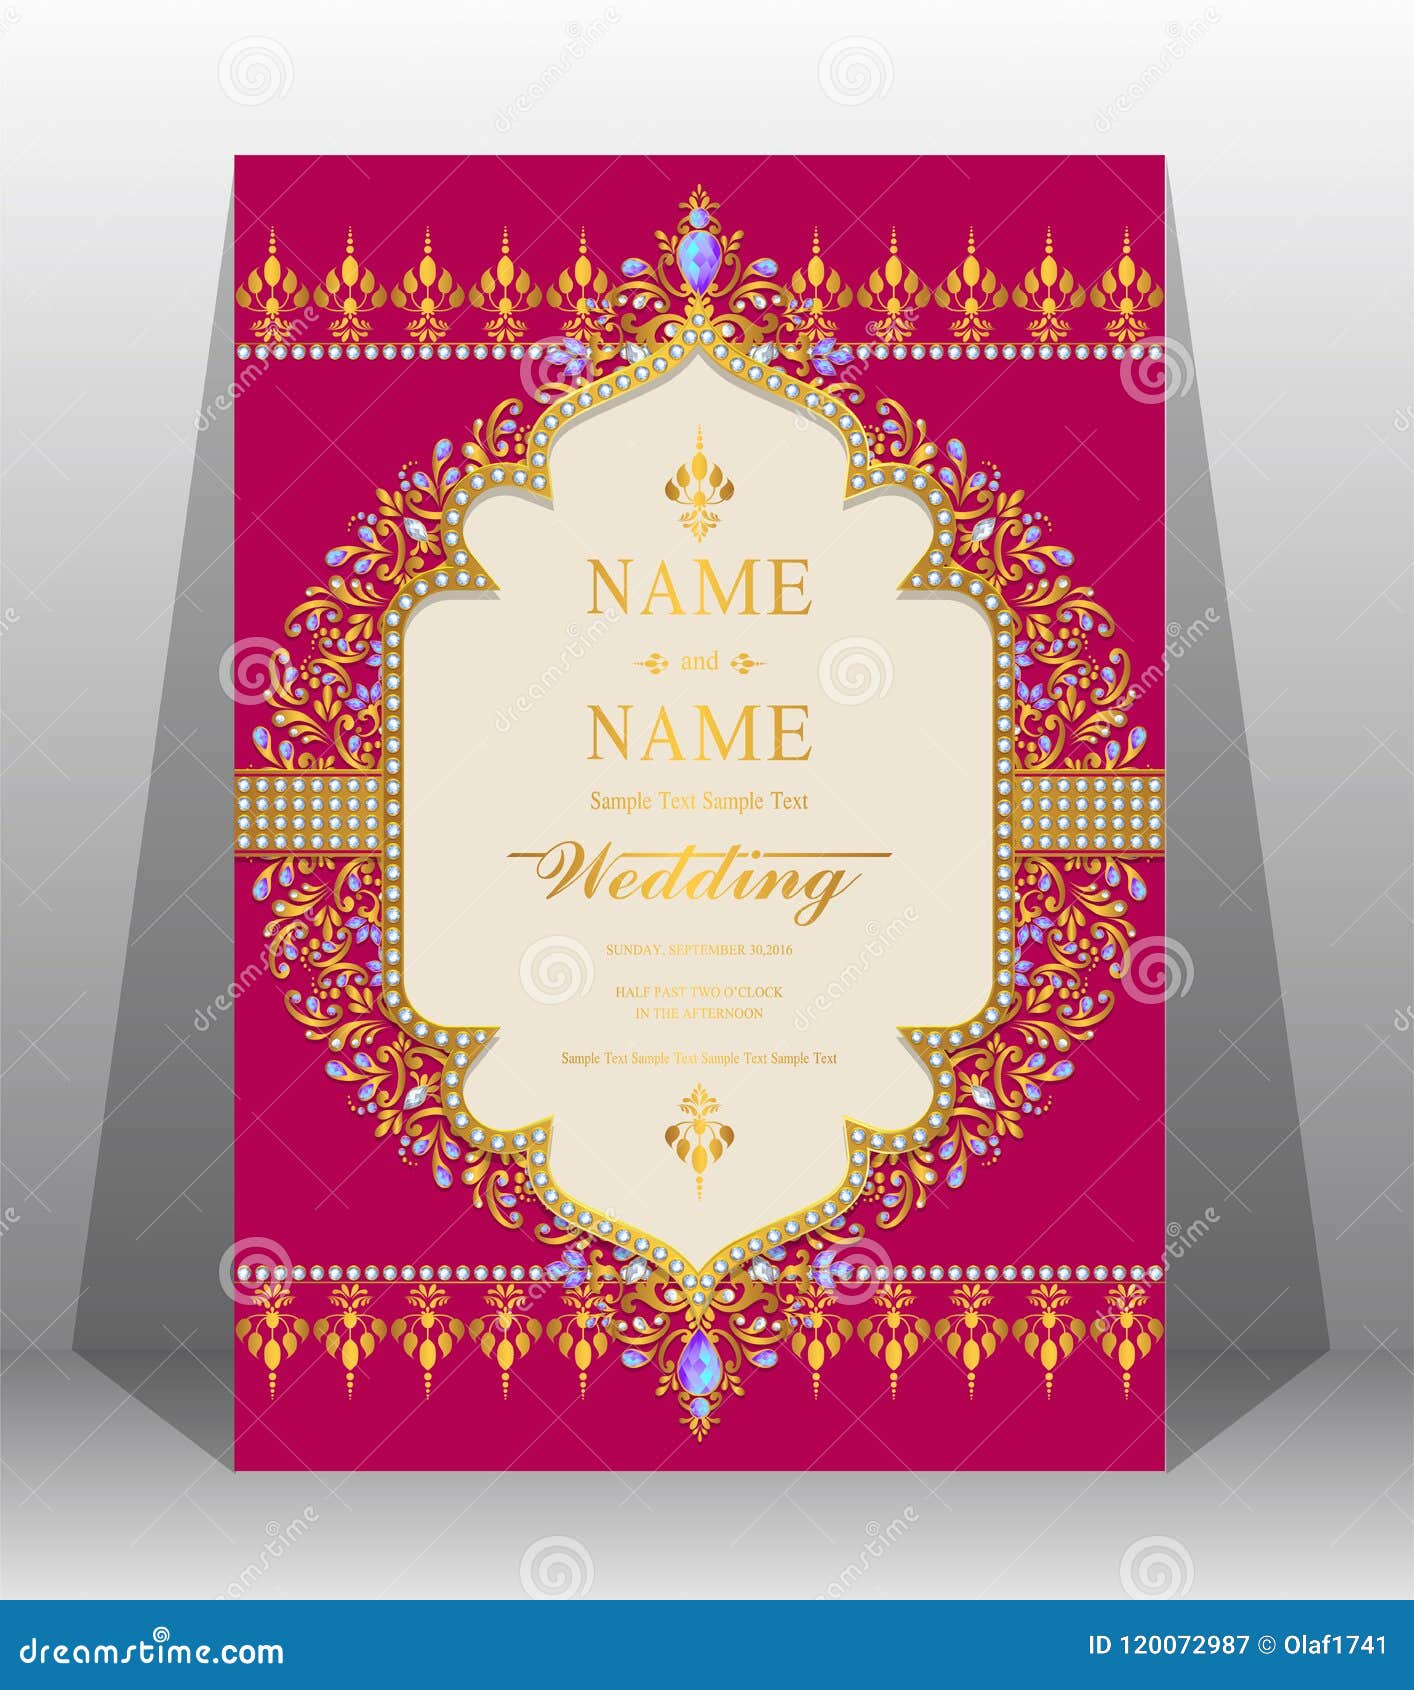 Wedding Invitation Card Templates . Stock Vector - Illustration of Inside Free E Wedding Invitation Card Templates